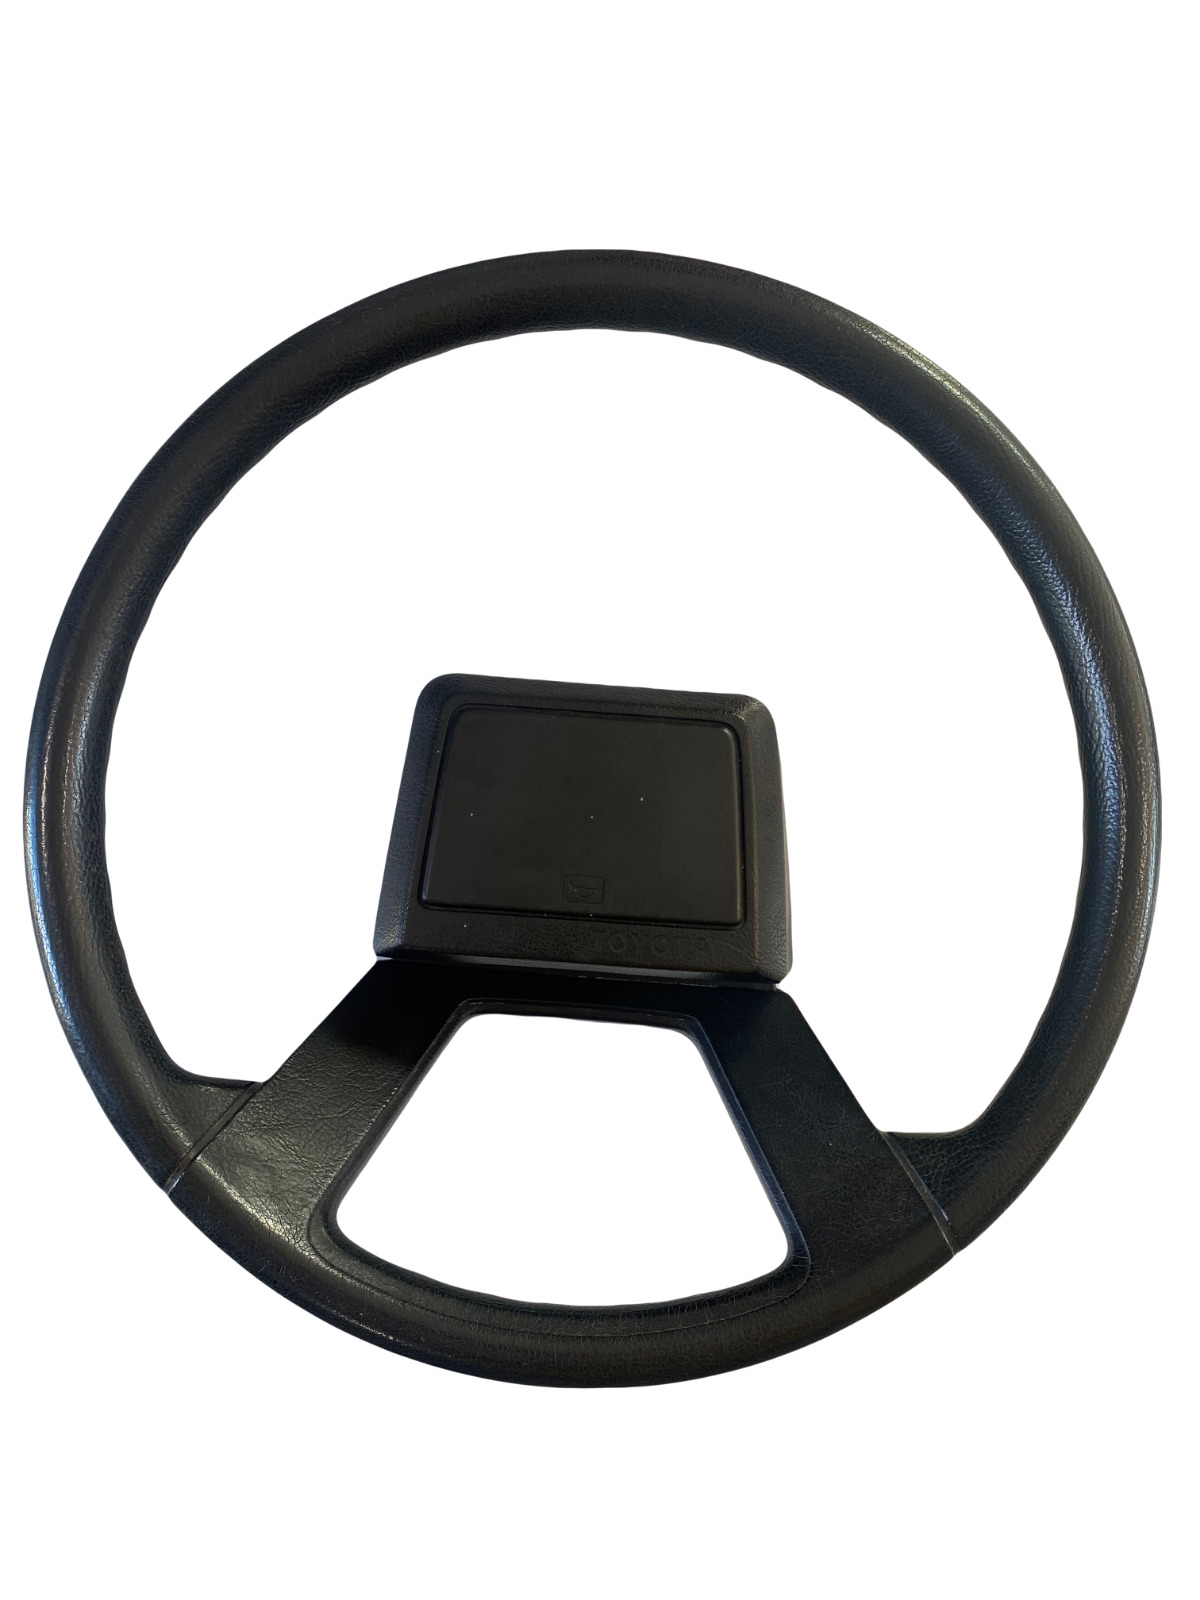 Genuine 83 Toyota Starlet Steering Wheel W/ Horn Black OEM Rare Ae86 Wheel